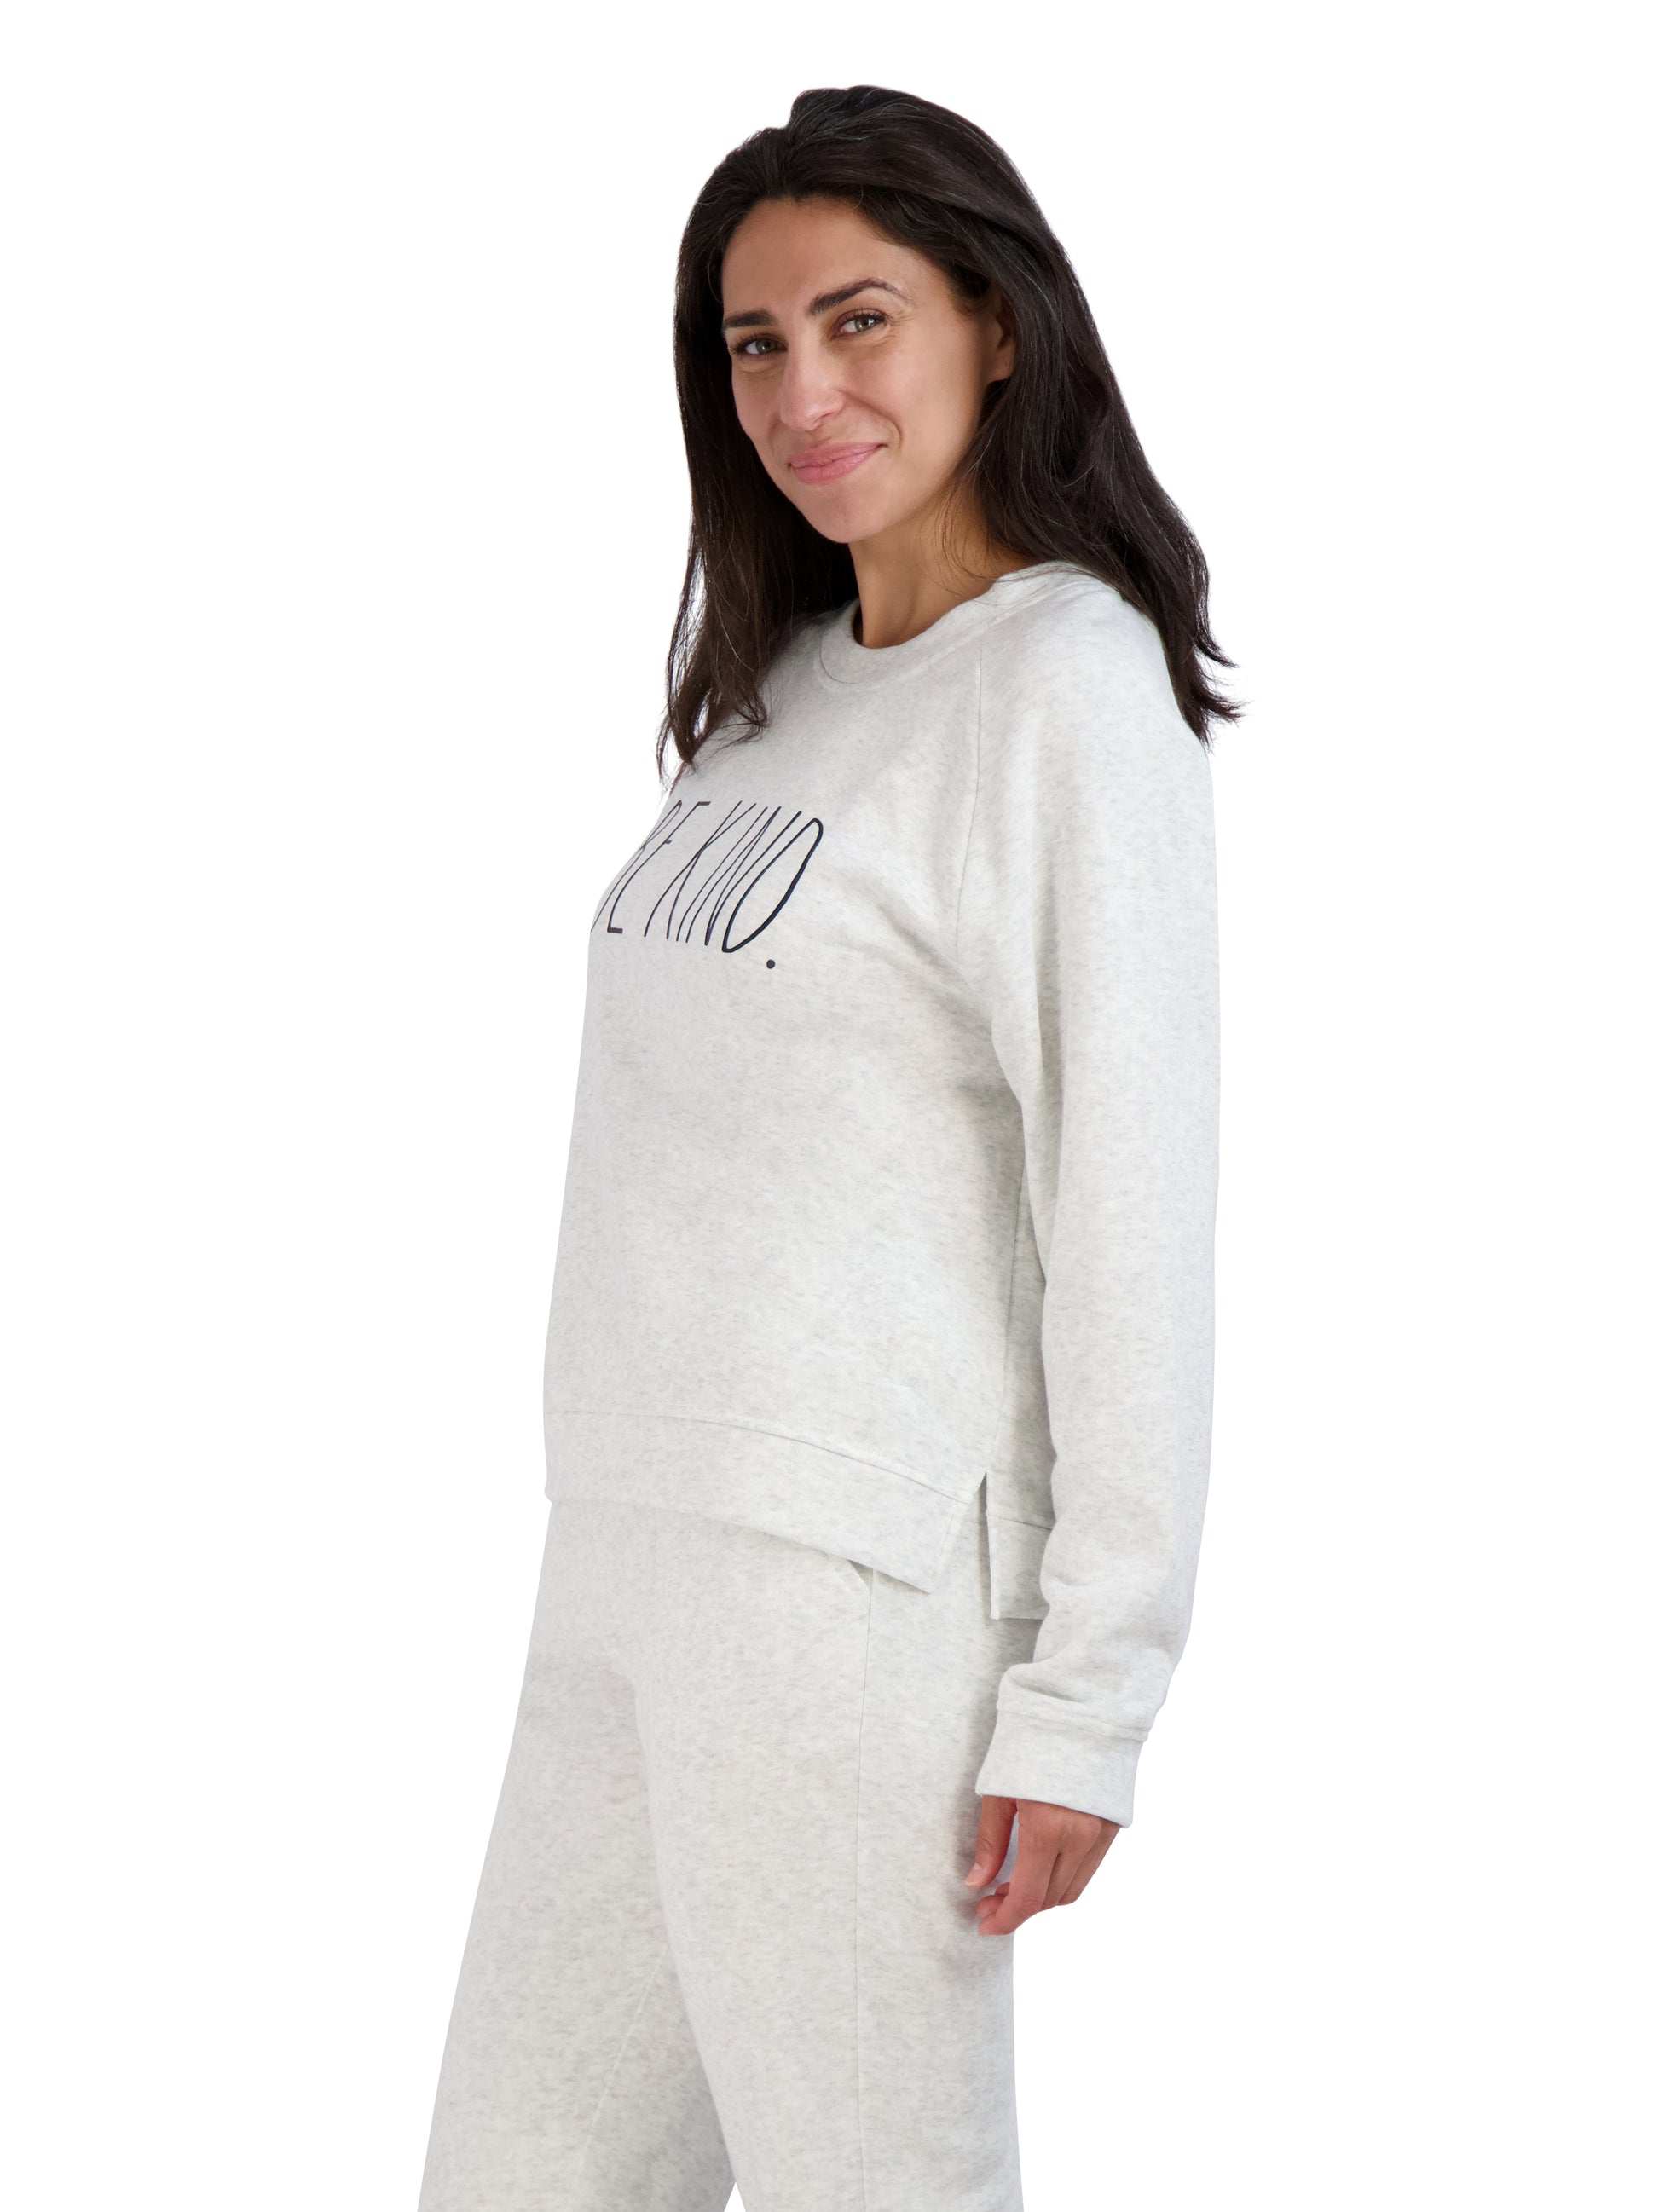 Rae Dunn Women's BE KIND Pullover Sweatshirt and Drawstring